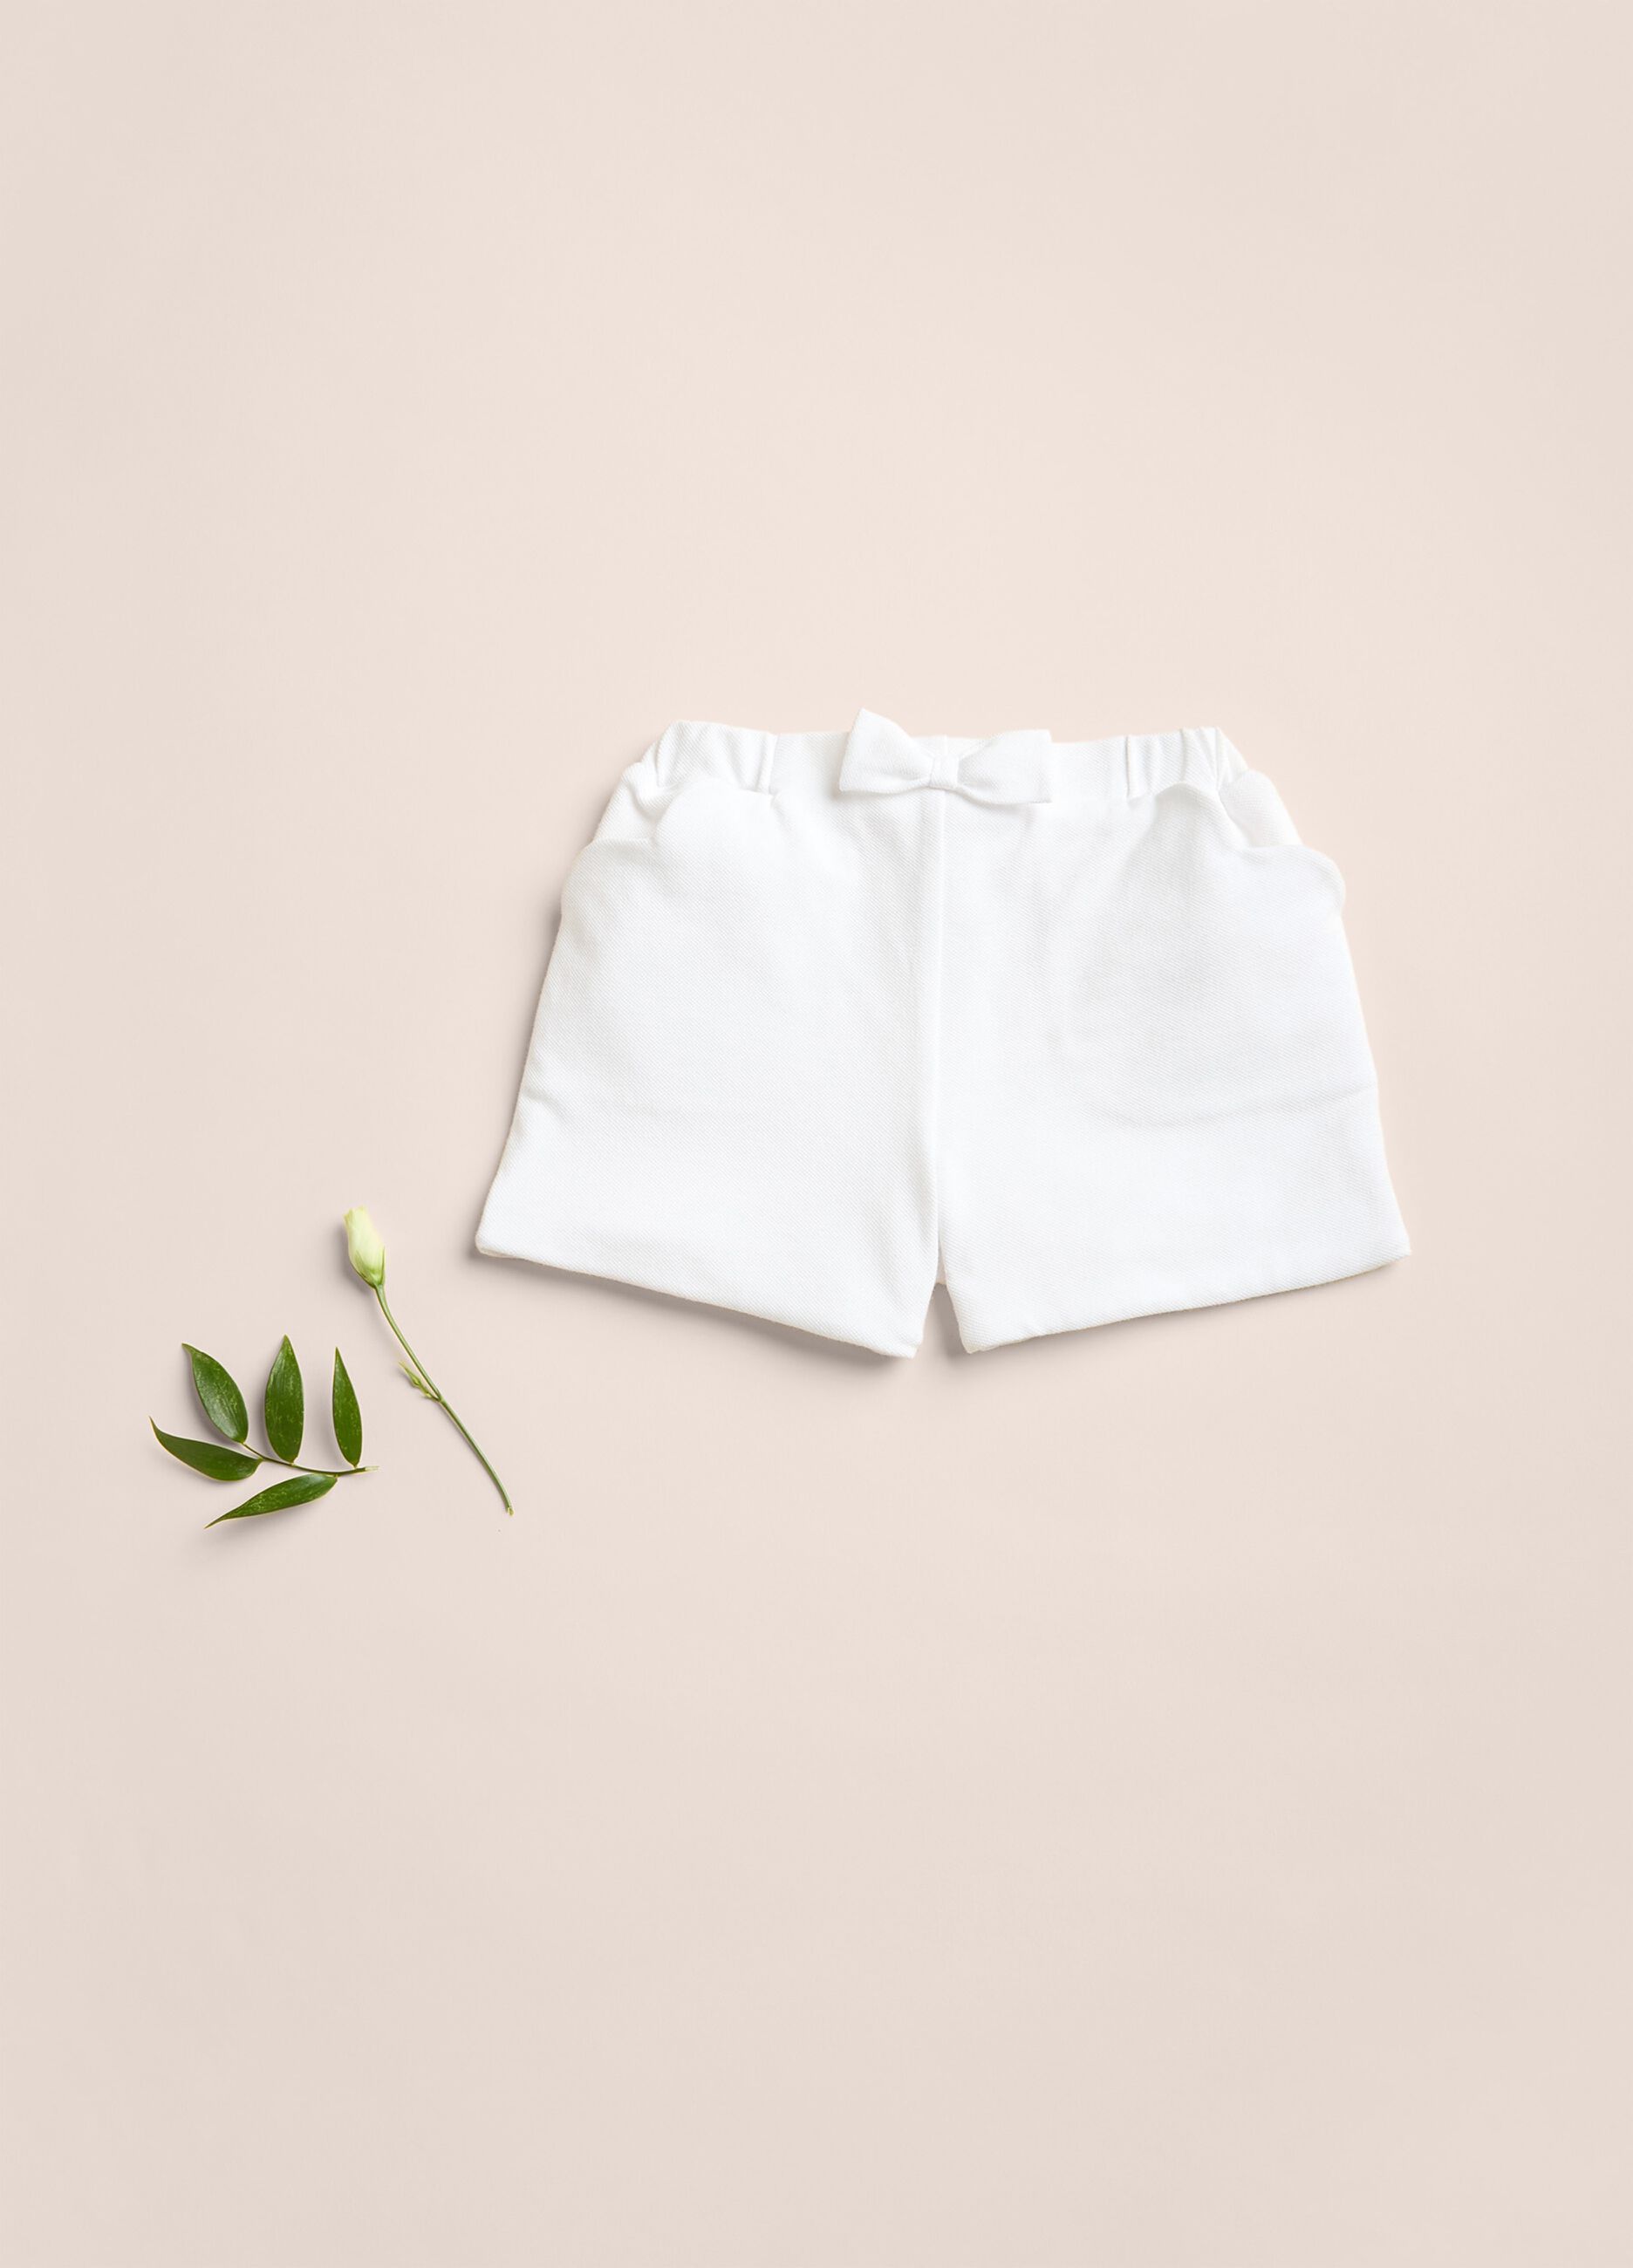 IANA stretch cotton shorts with bow.